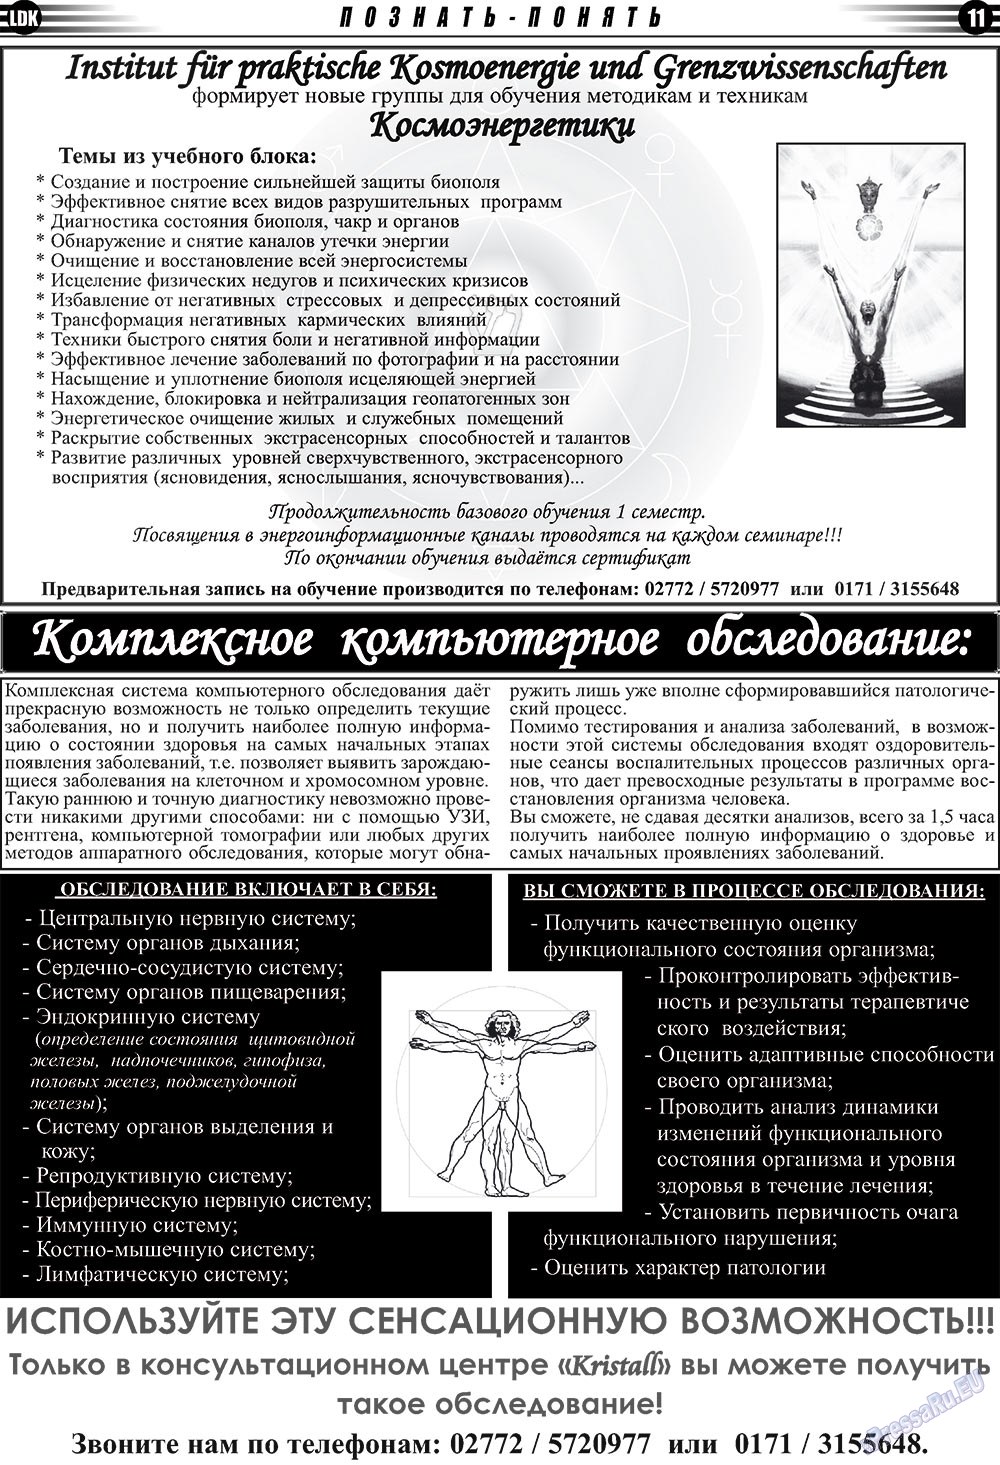 LDK по-русски, газета. 2009 №3 стр.11